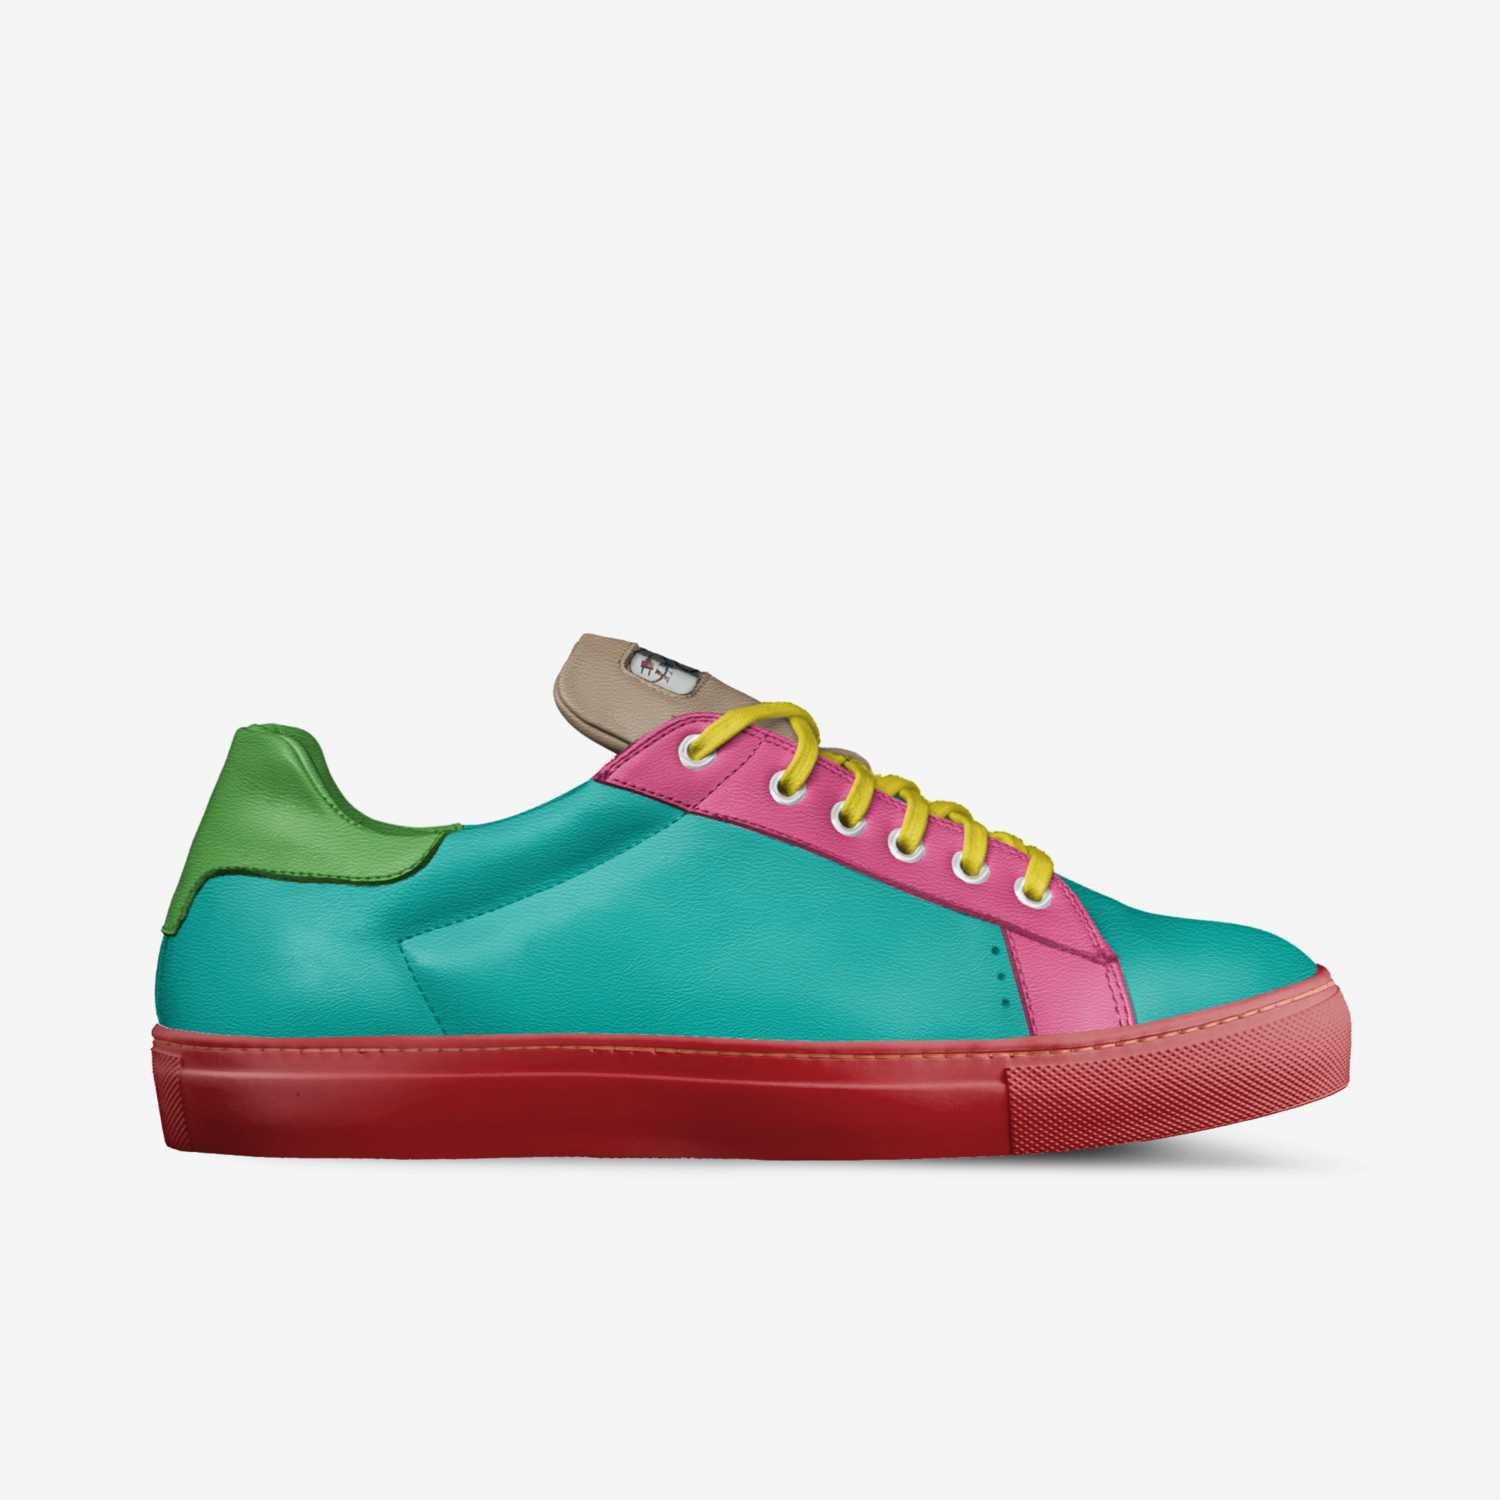 GIMP | A Custom Shoe concept by Romita Sullivan